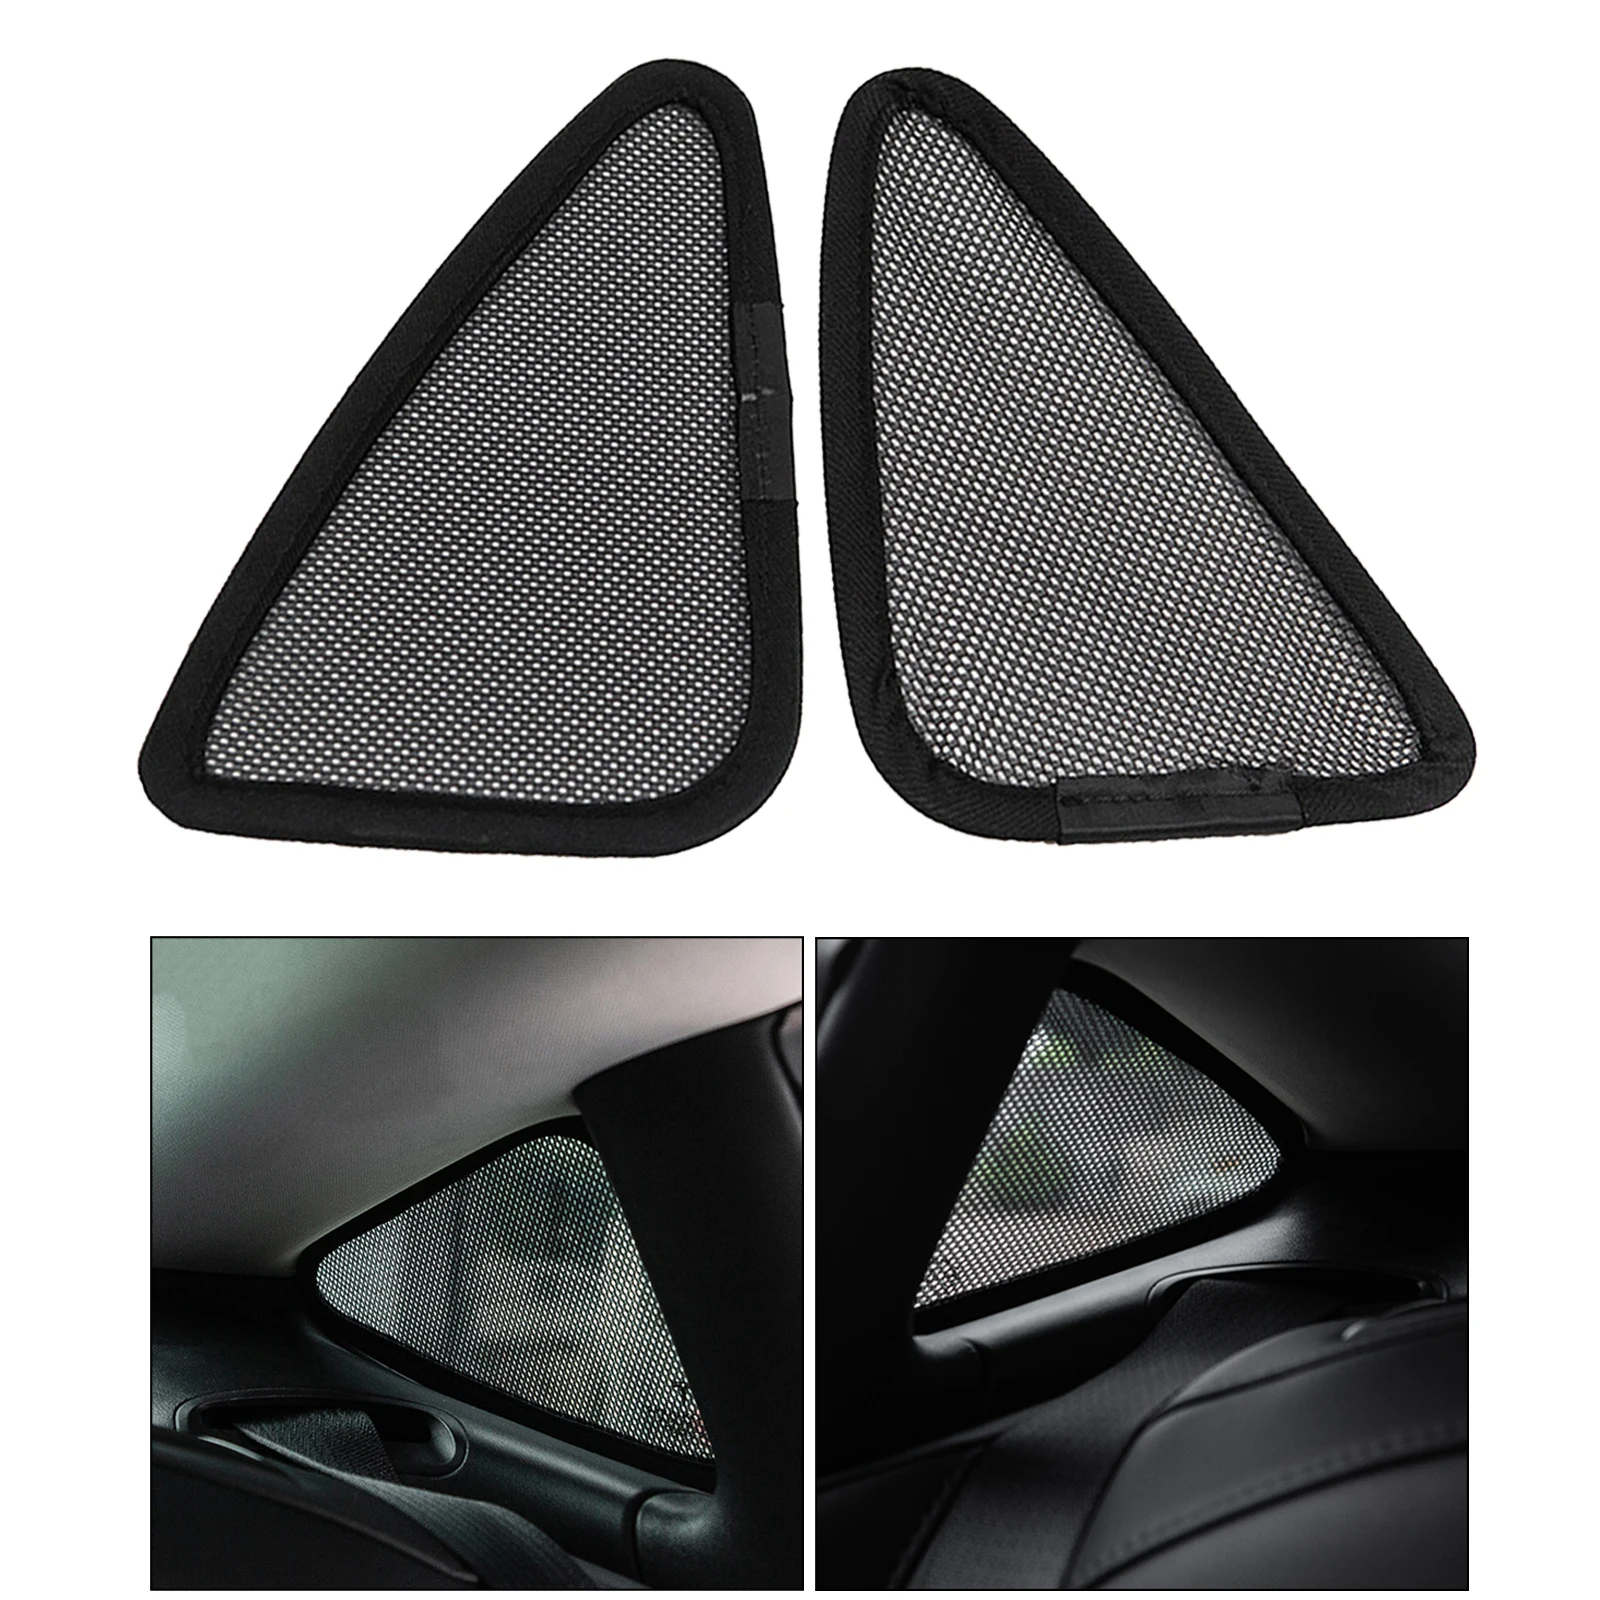 2Pcs Car Sunshade Cover Triangular Net for Tesla Model 3, Easy Install